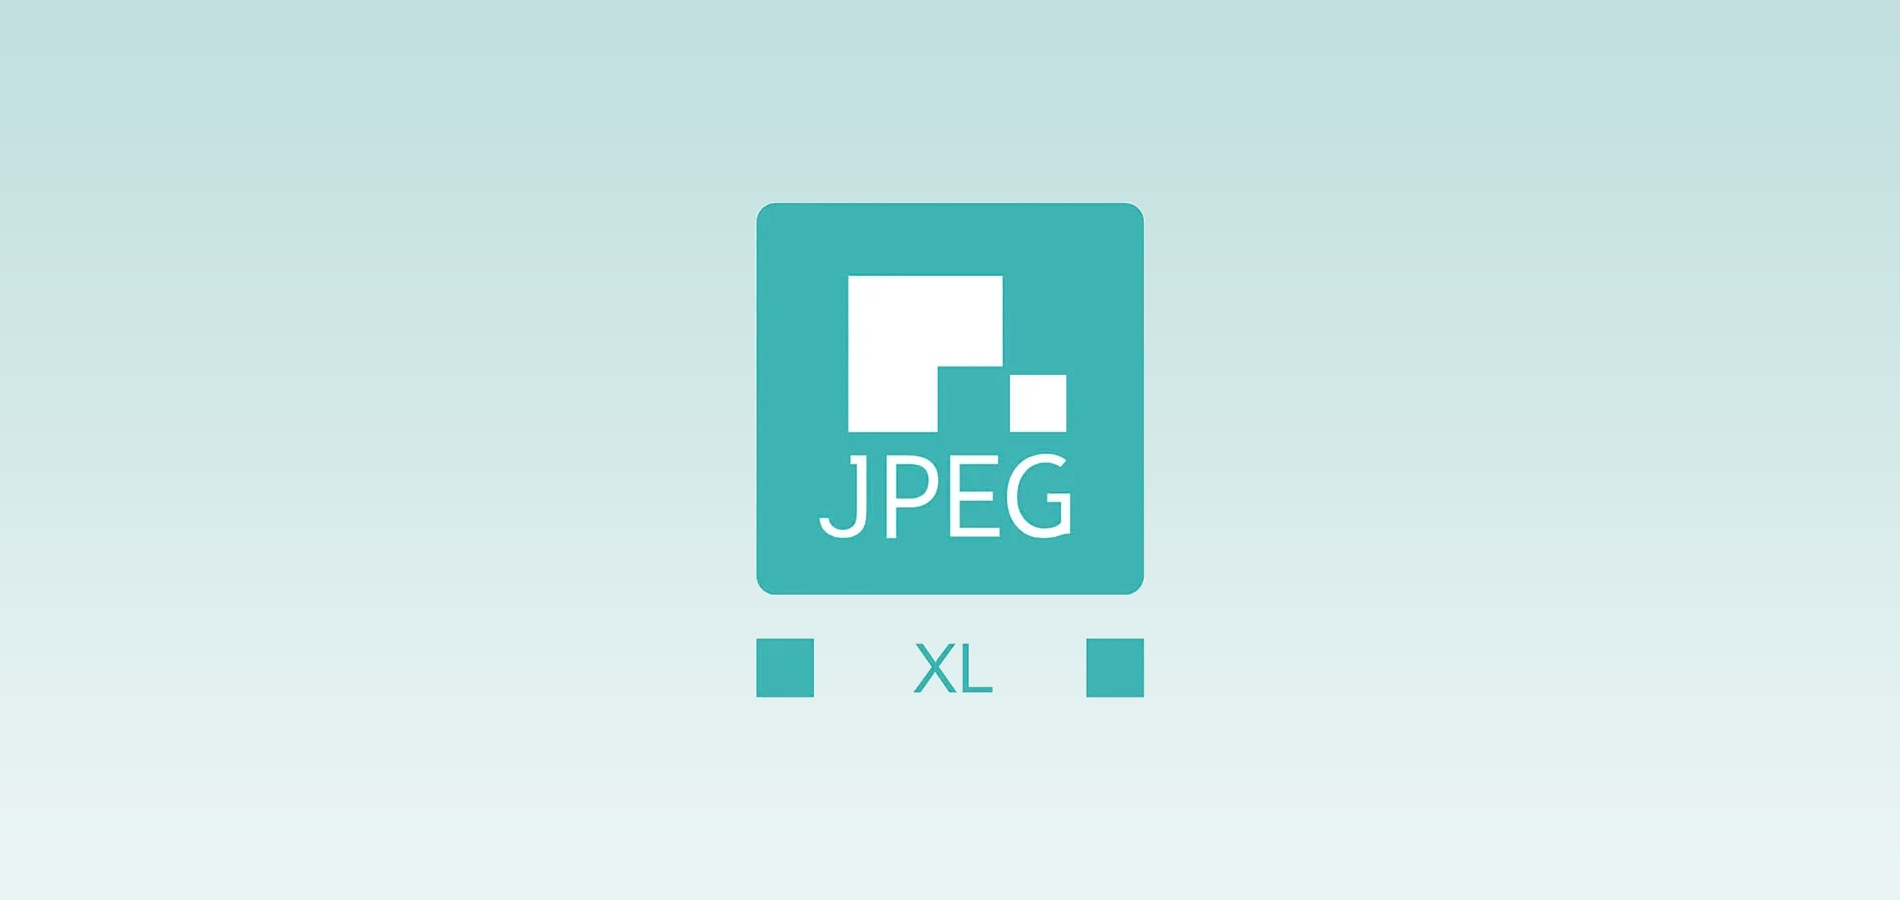 Google прекратит поддержку JPEG XL в Chrome